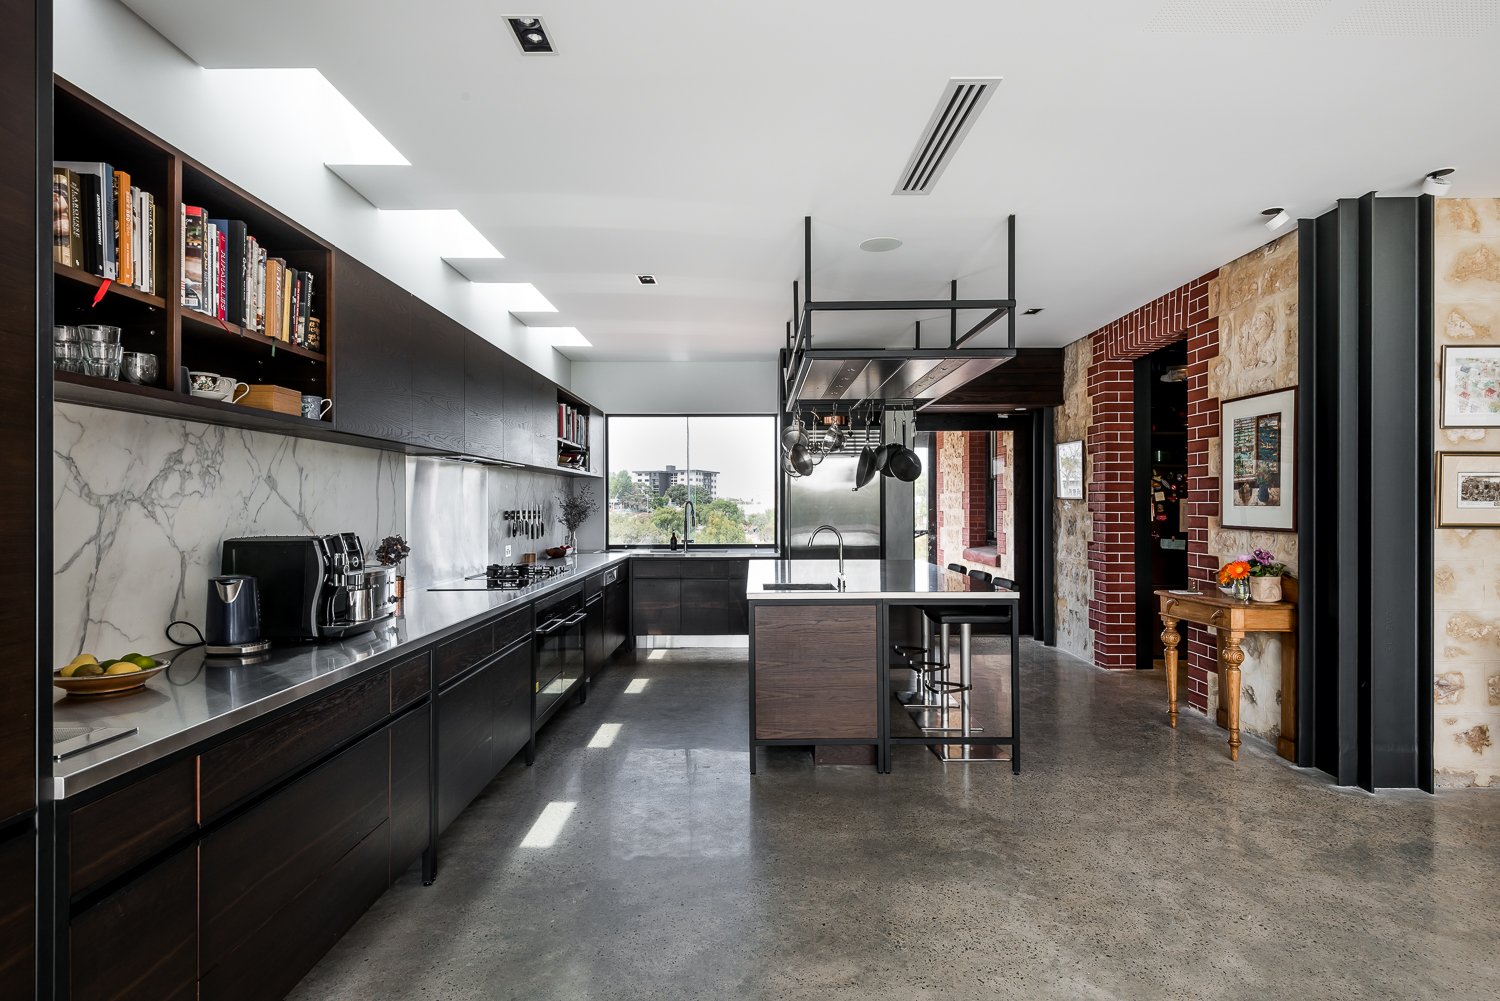 Open kitchen concrete floors heritage home East Fremantle Keen Architecture.jpg